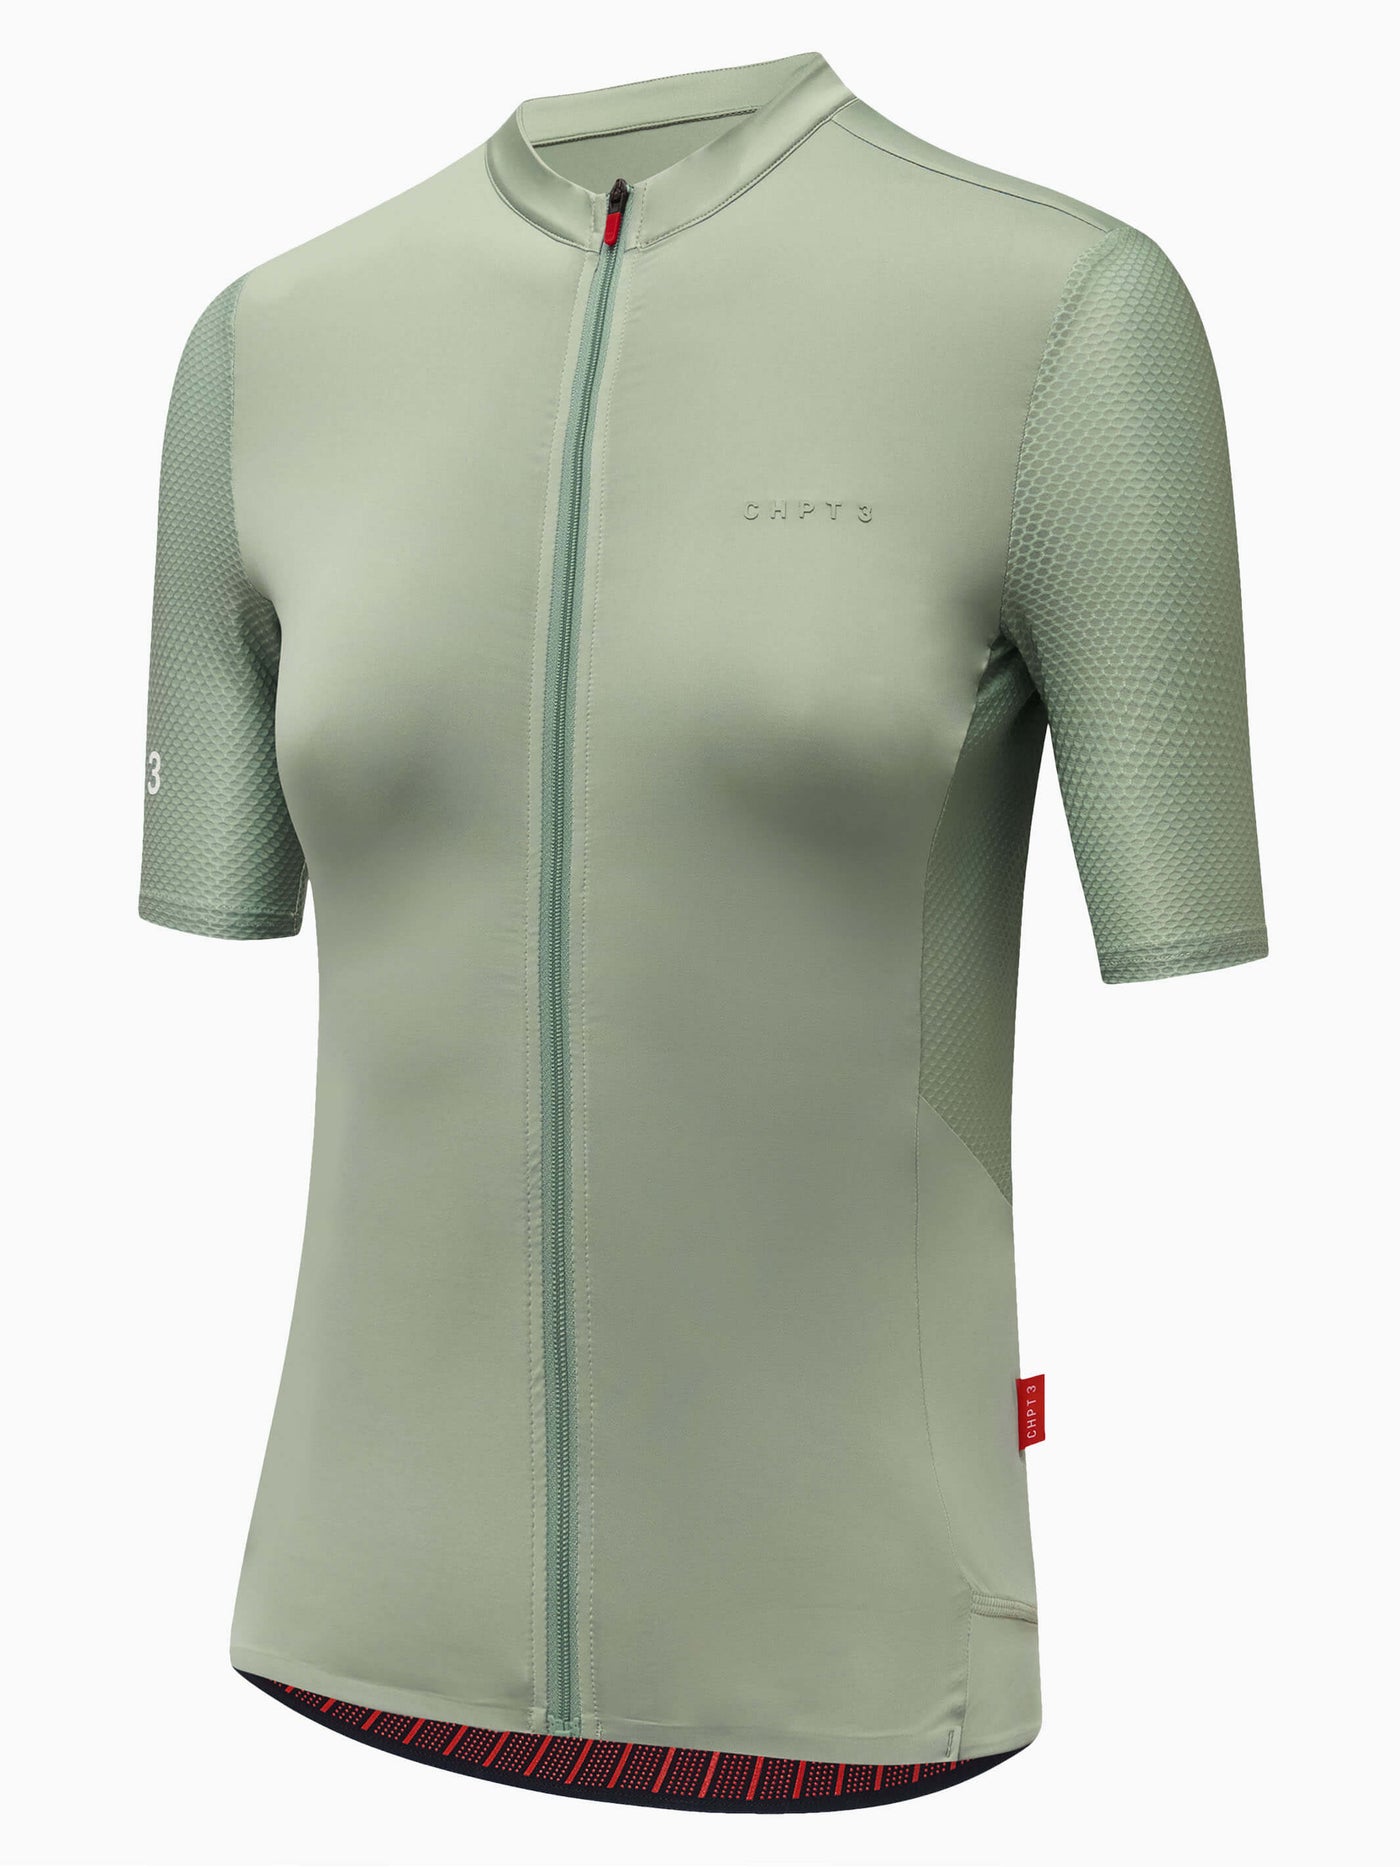 CHPT3 women's short sleeve Aero jersey, in Lichen Green, viewed from side #color_lichen-green